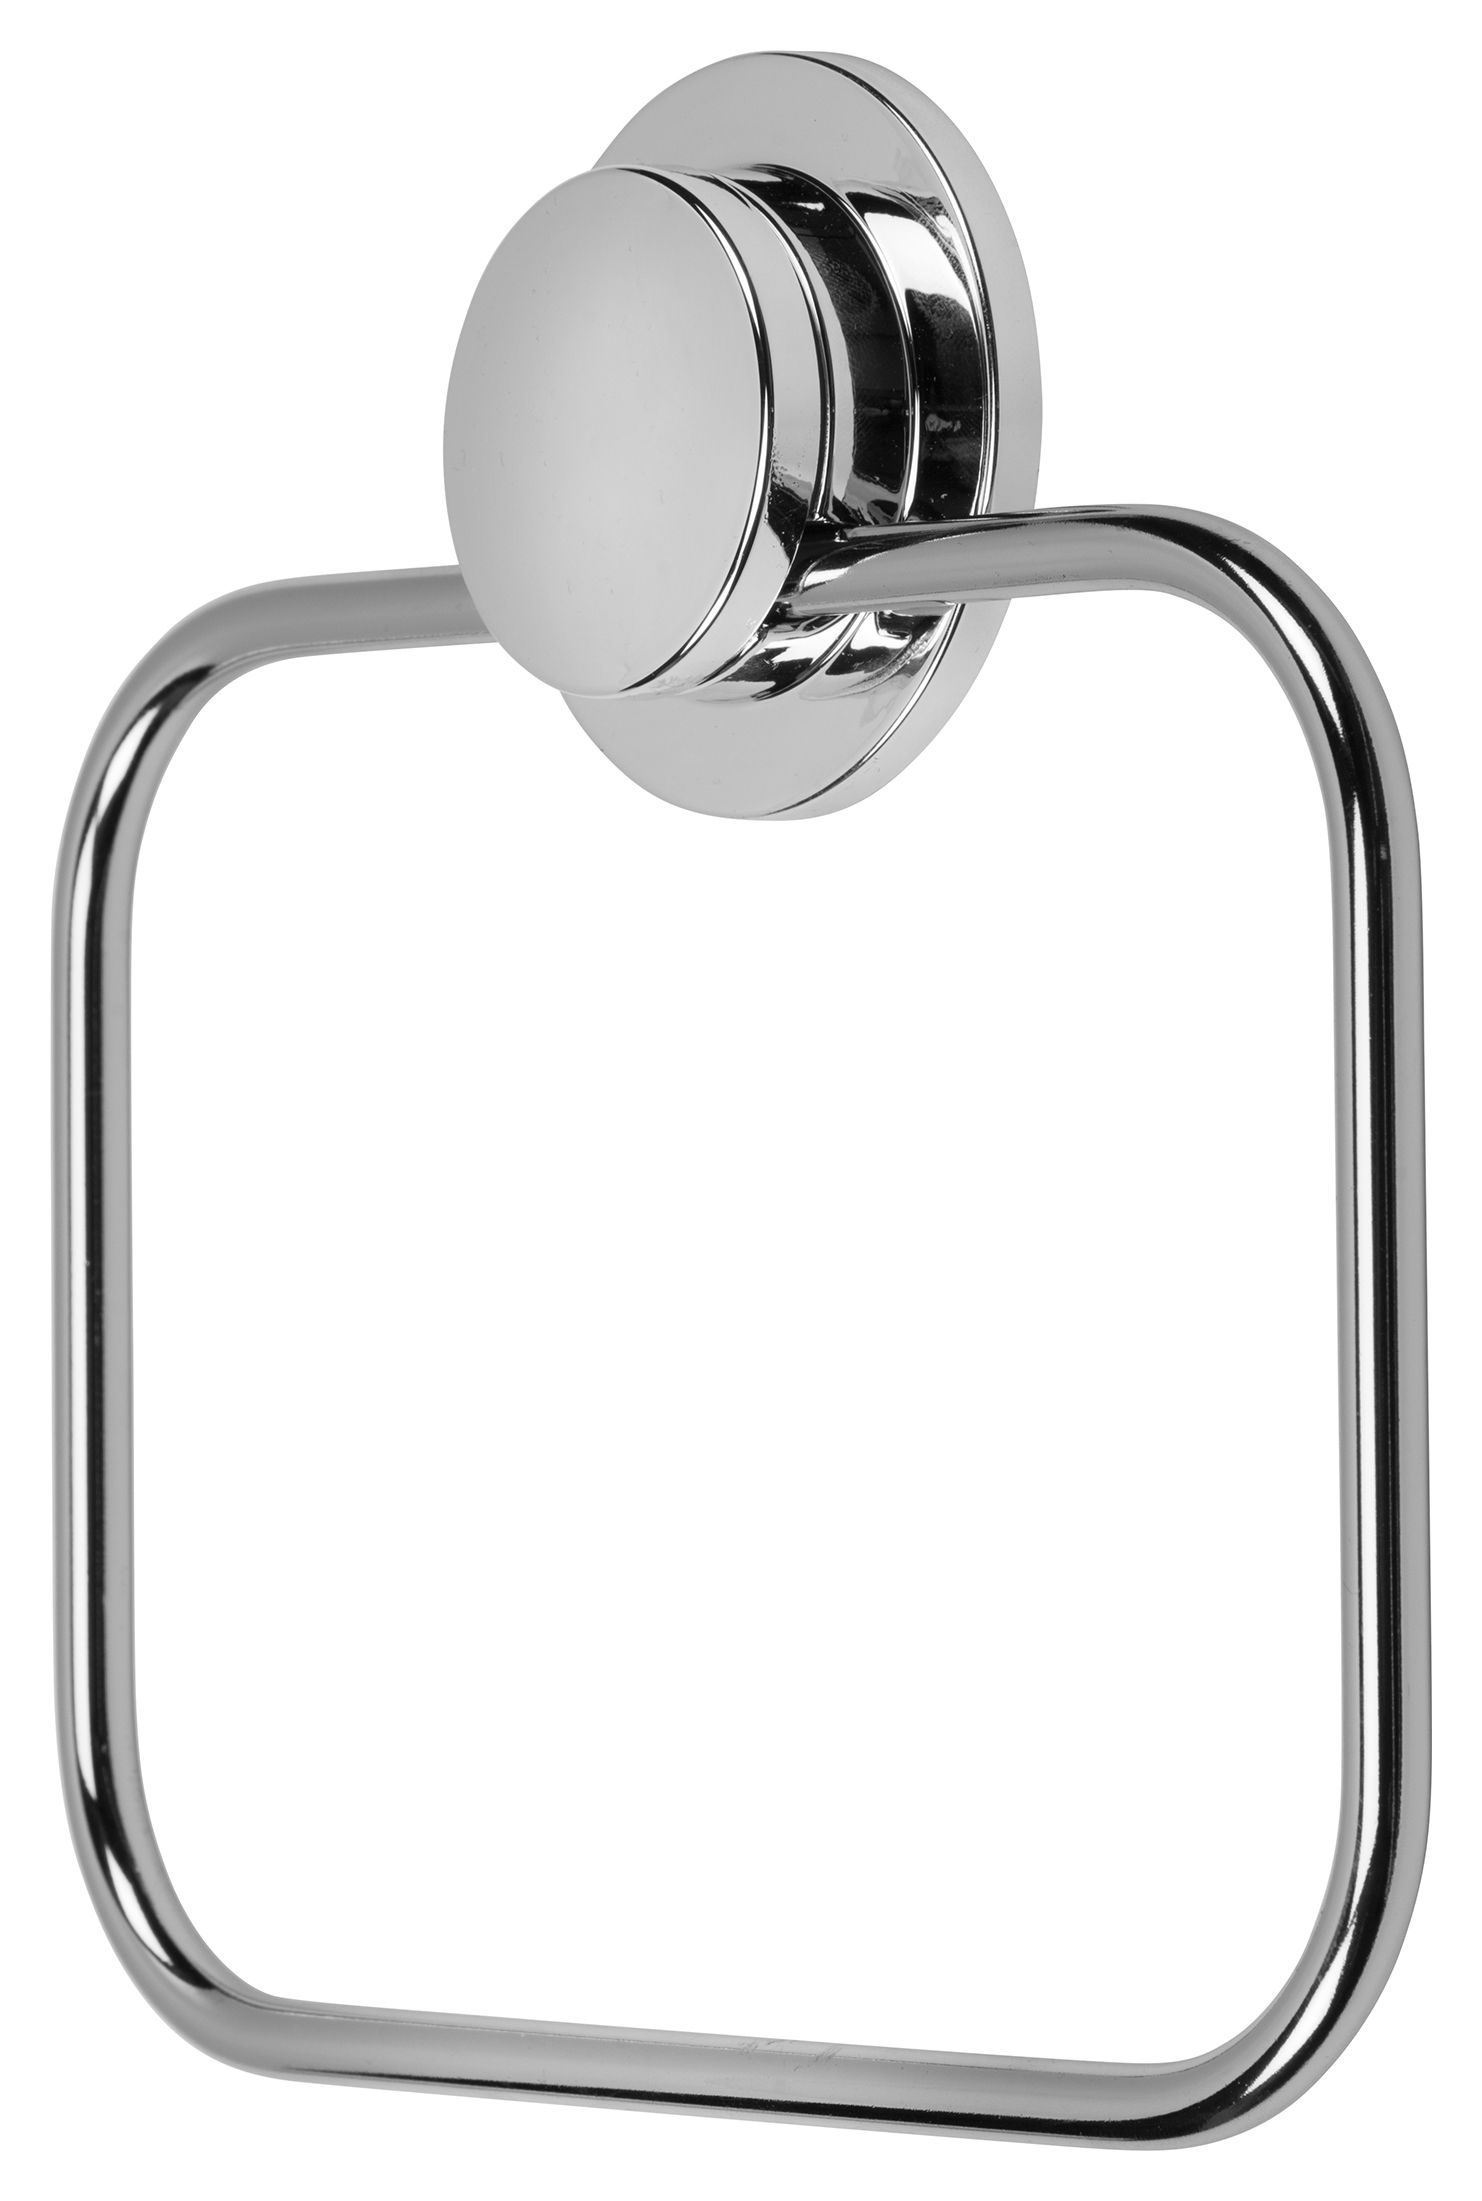 Croydex Stick 'n' Lock™ Bathroom Towel Ring - Chrome